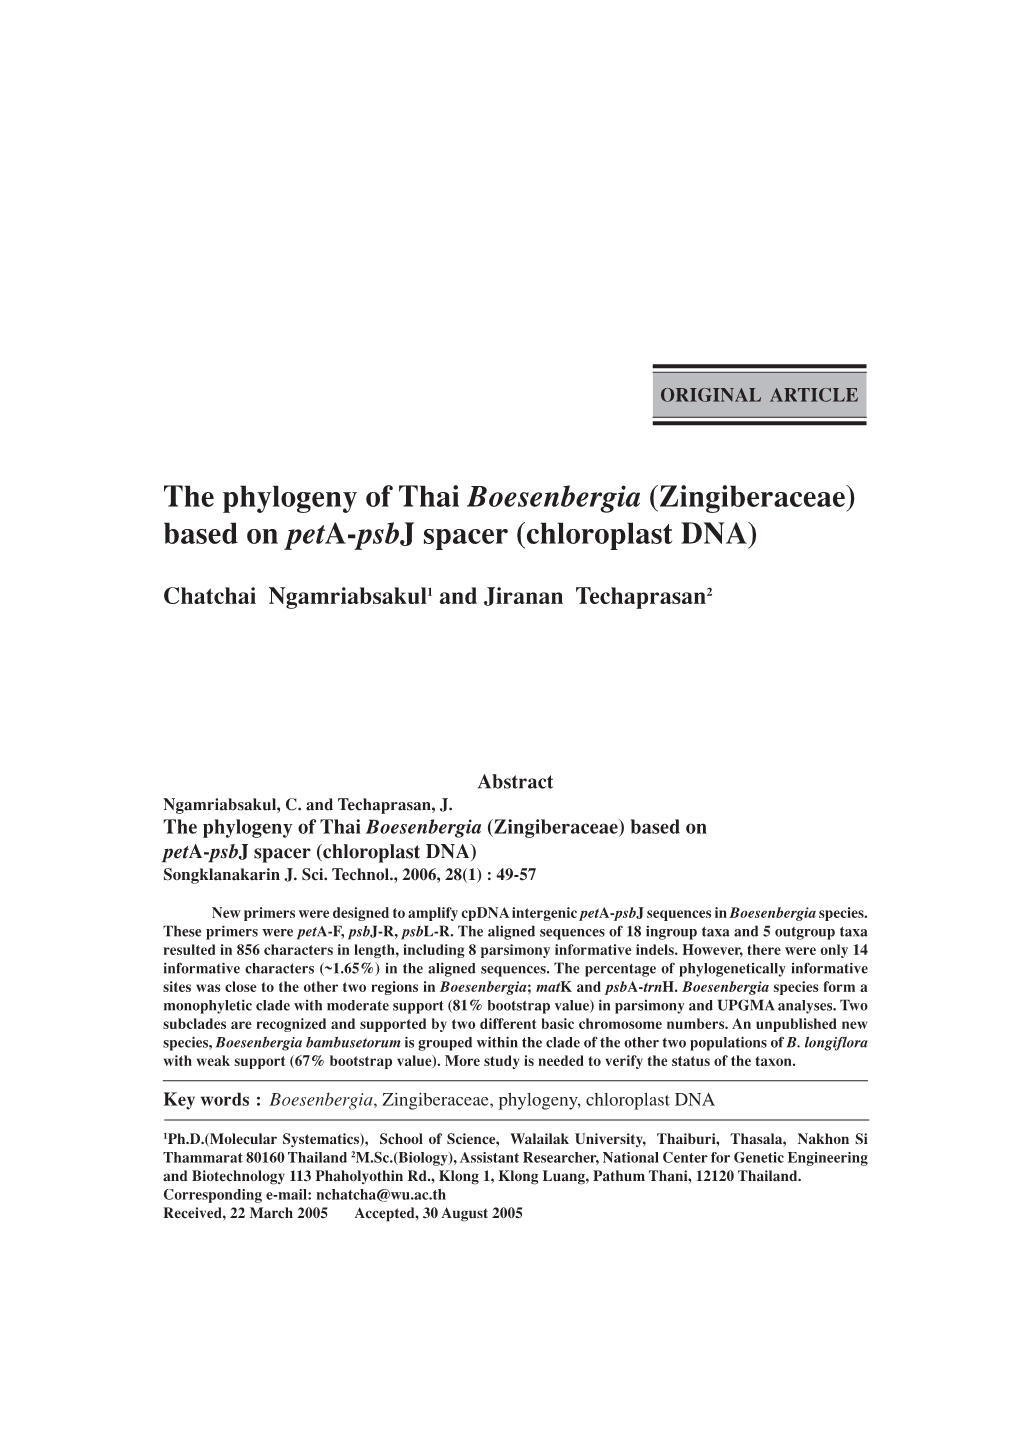 The Phylogeny of Thai Boesenbergia (Zingiberaceae) Based on Peta-Psbj Spacer (Chloroplast DNA)